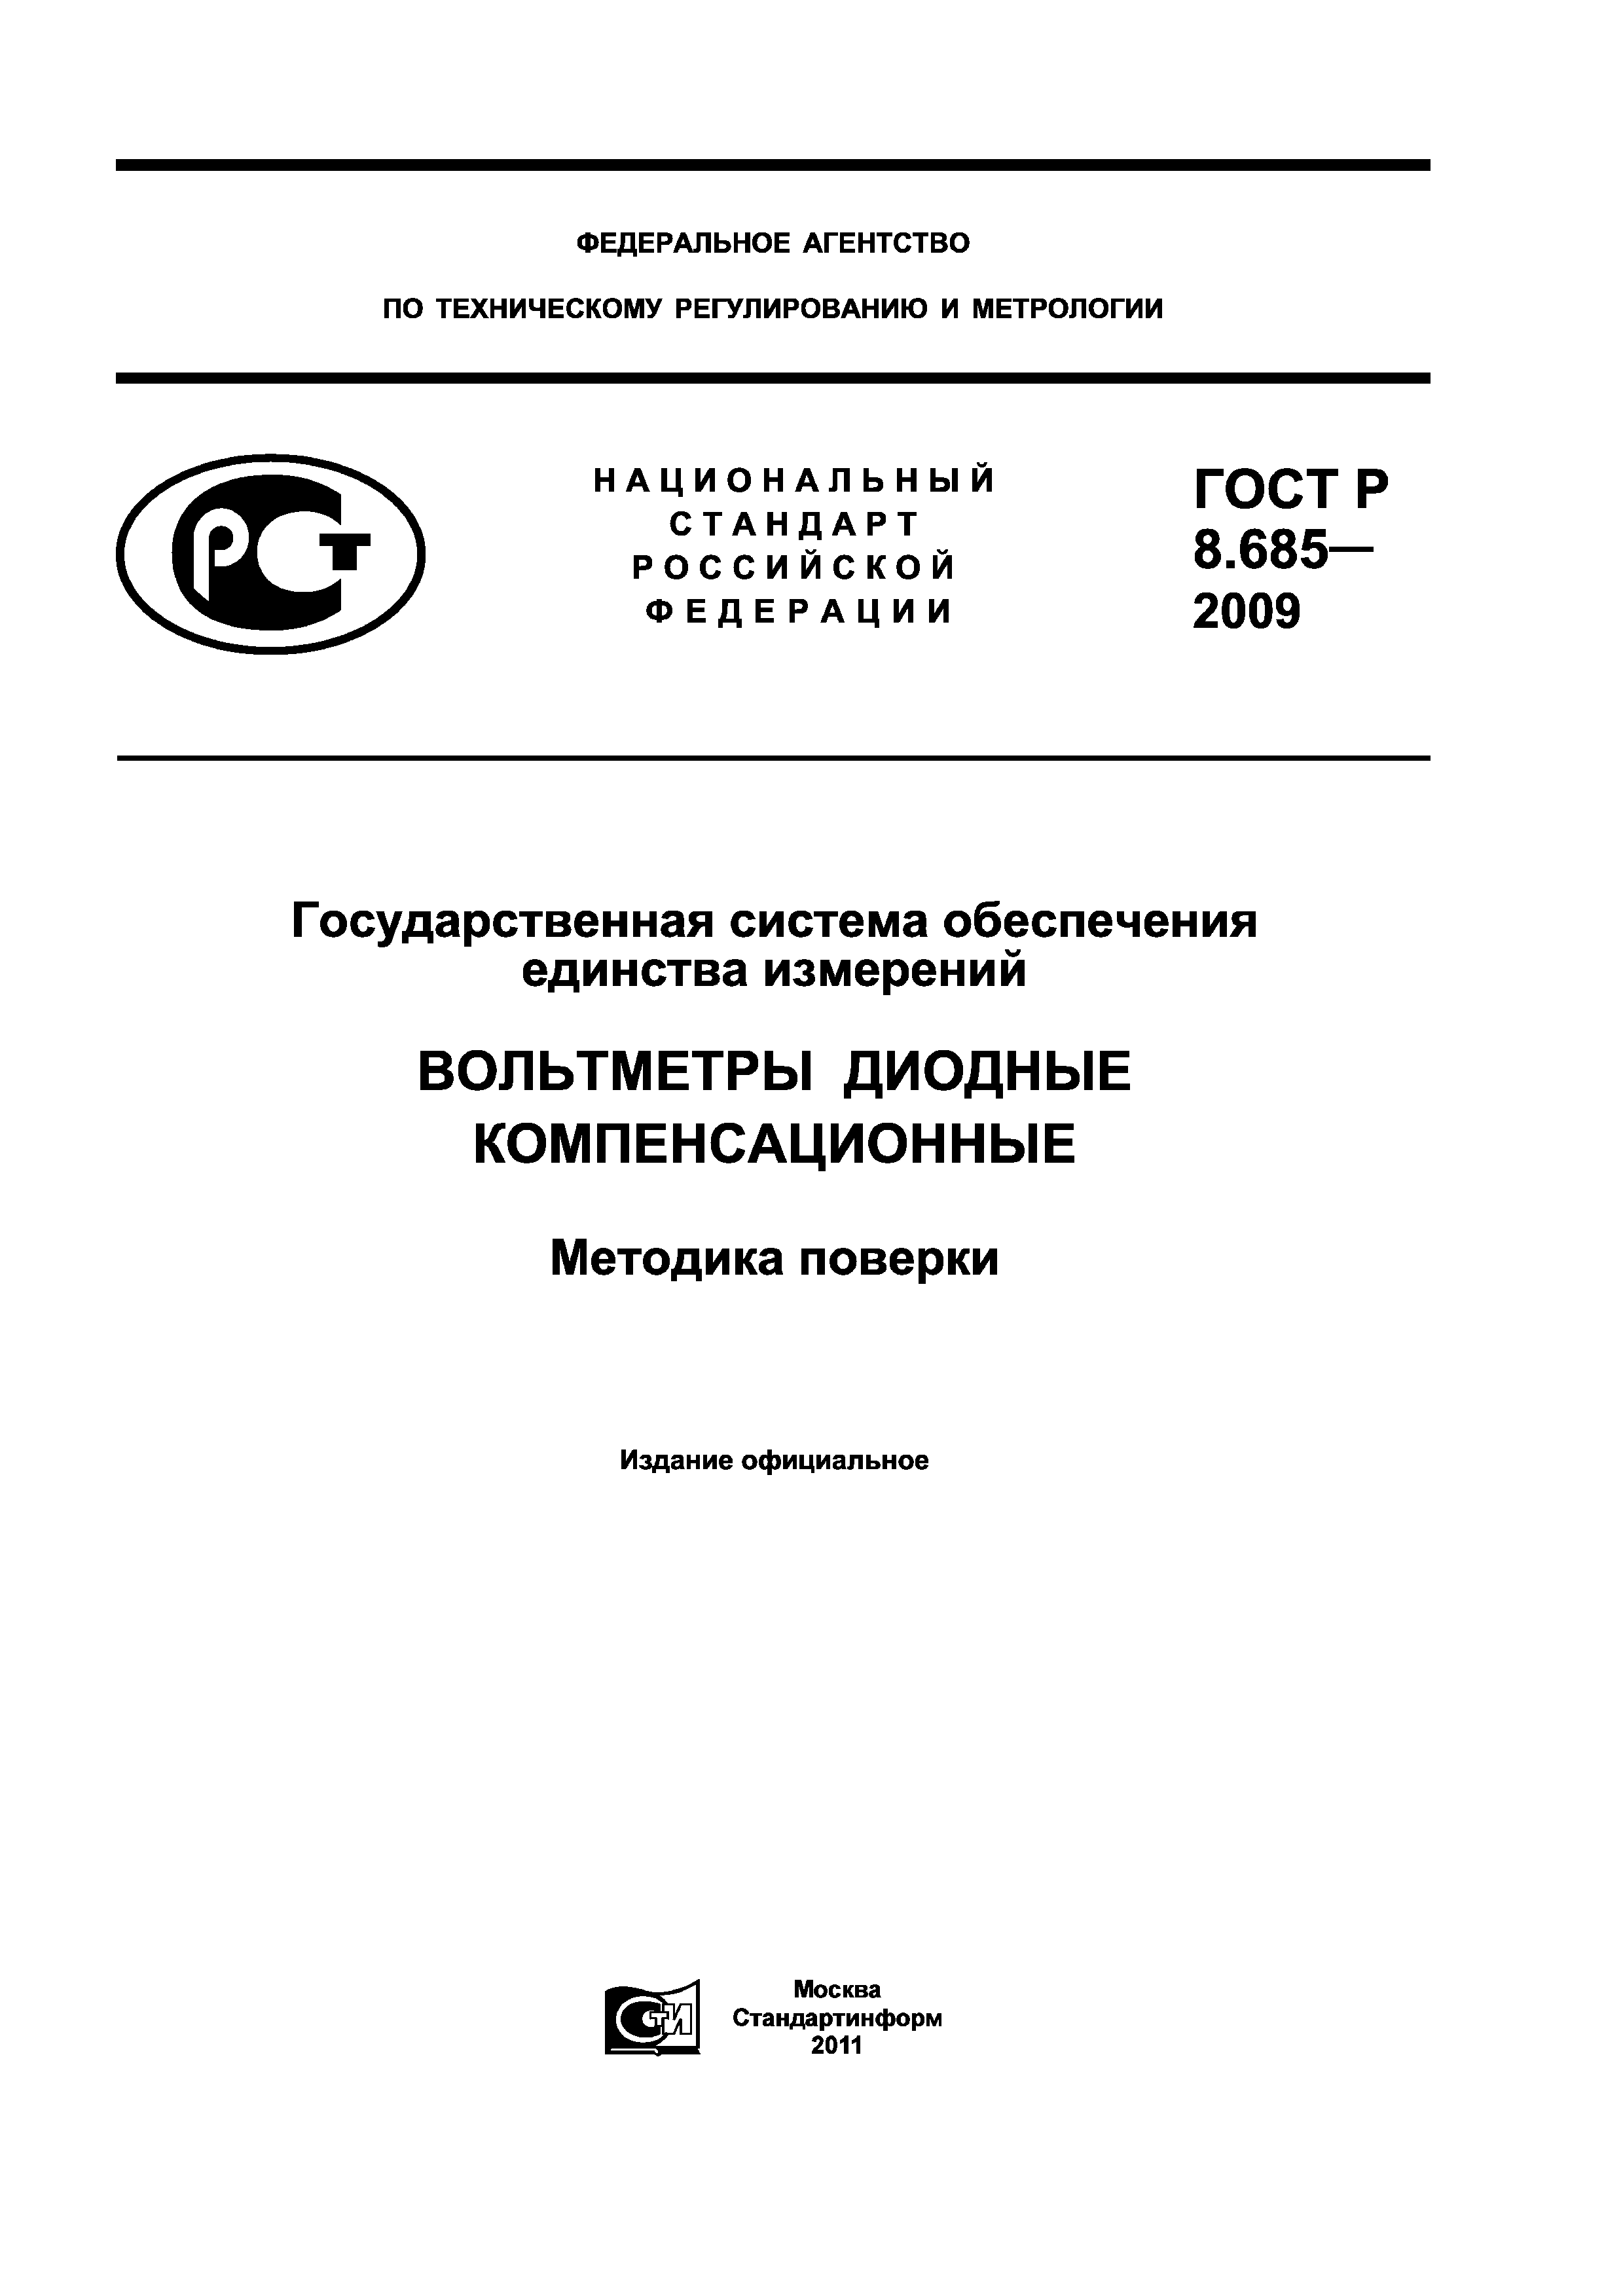 ГОСТ Р 8.685-2009